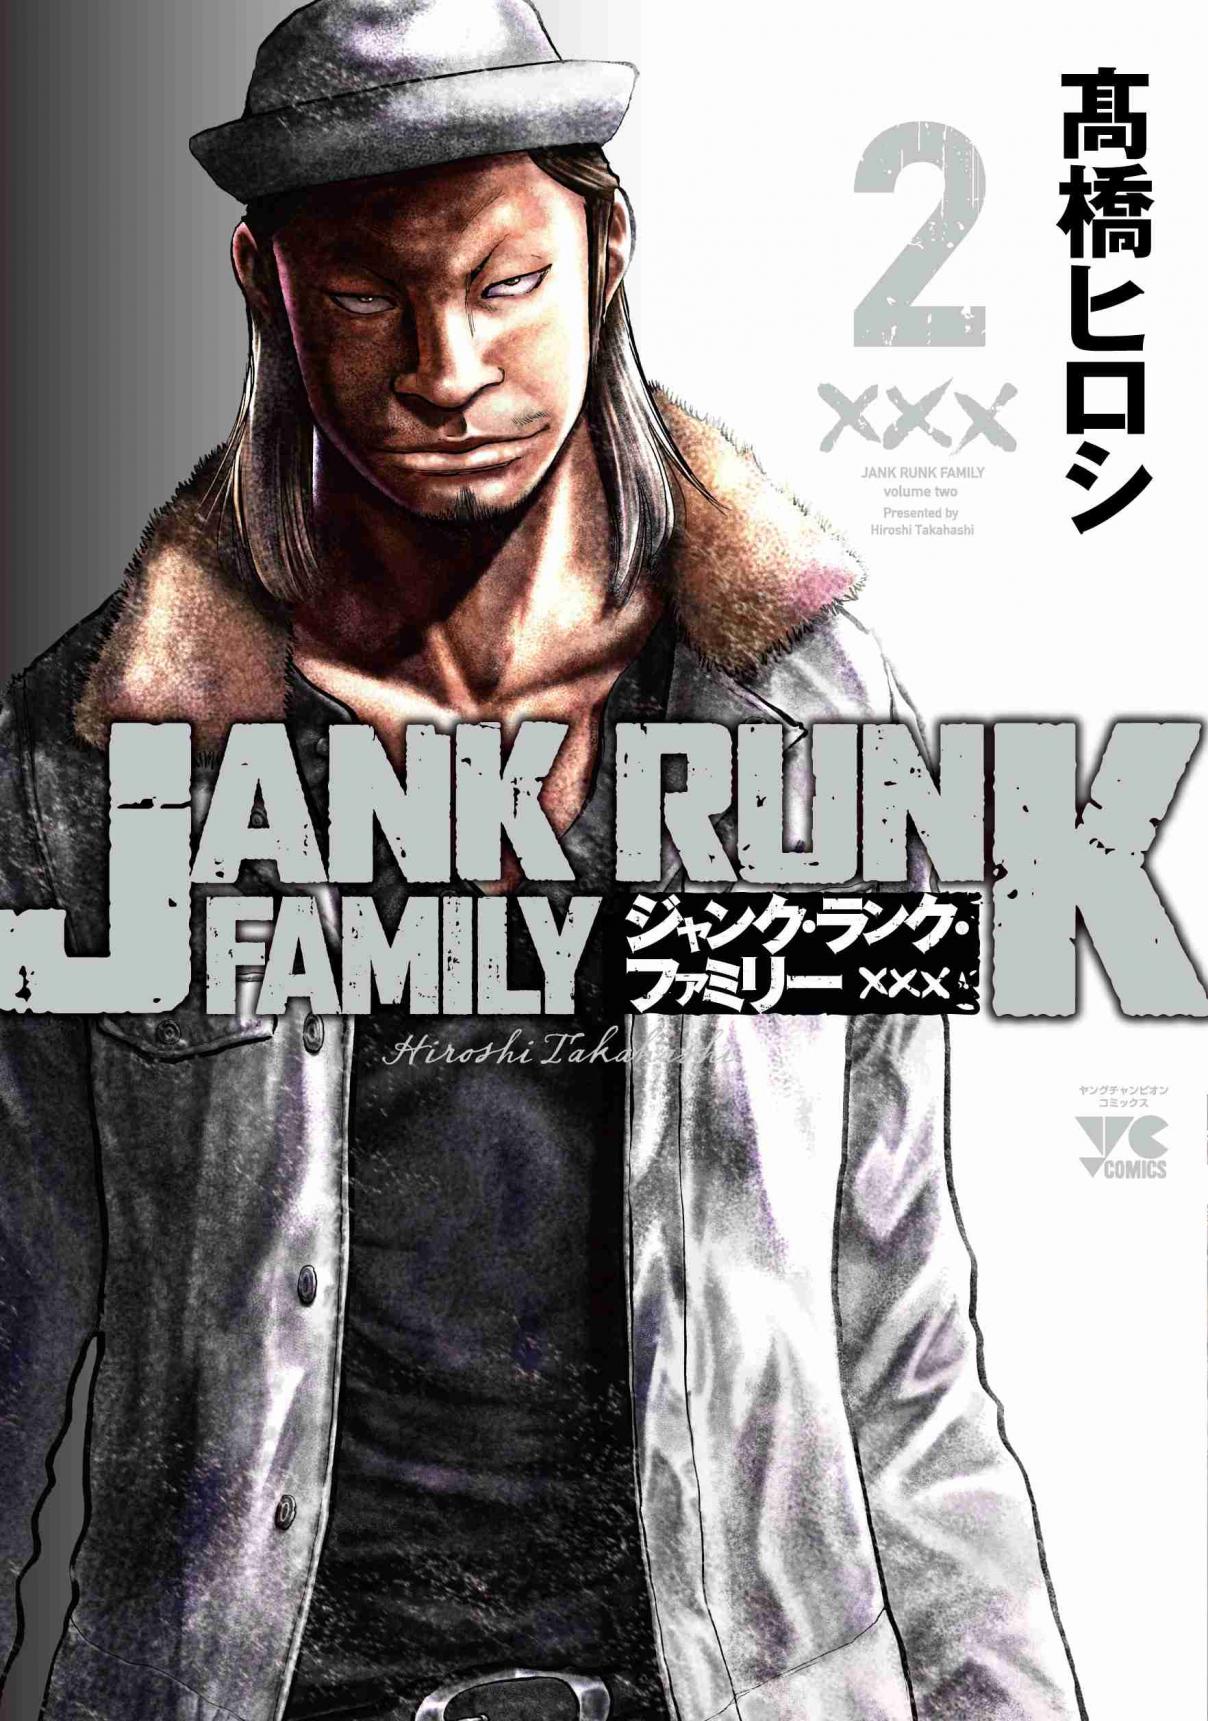 Jank Runk Family Vol. 2 Ch. 9 Zabo Roche, part 2